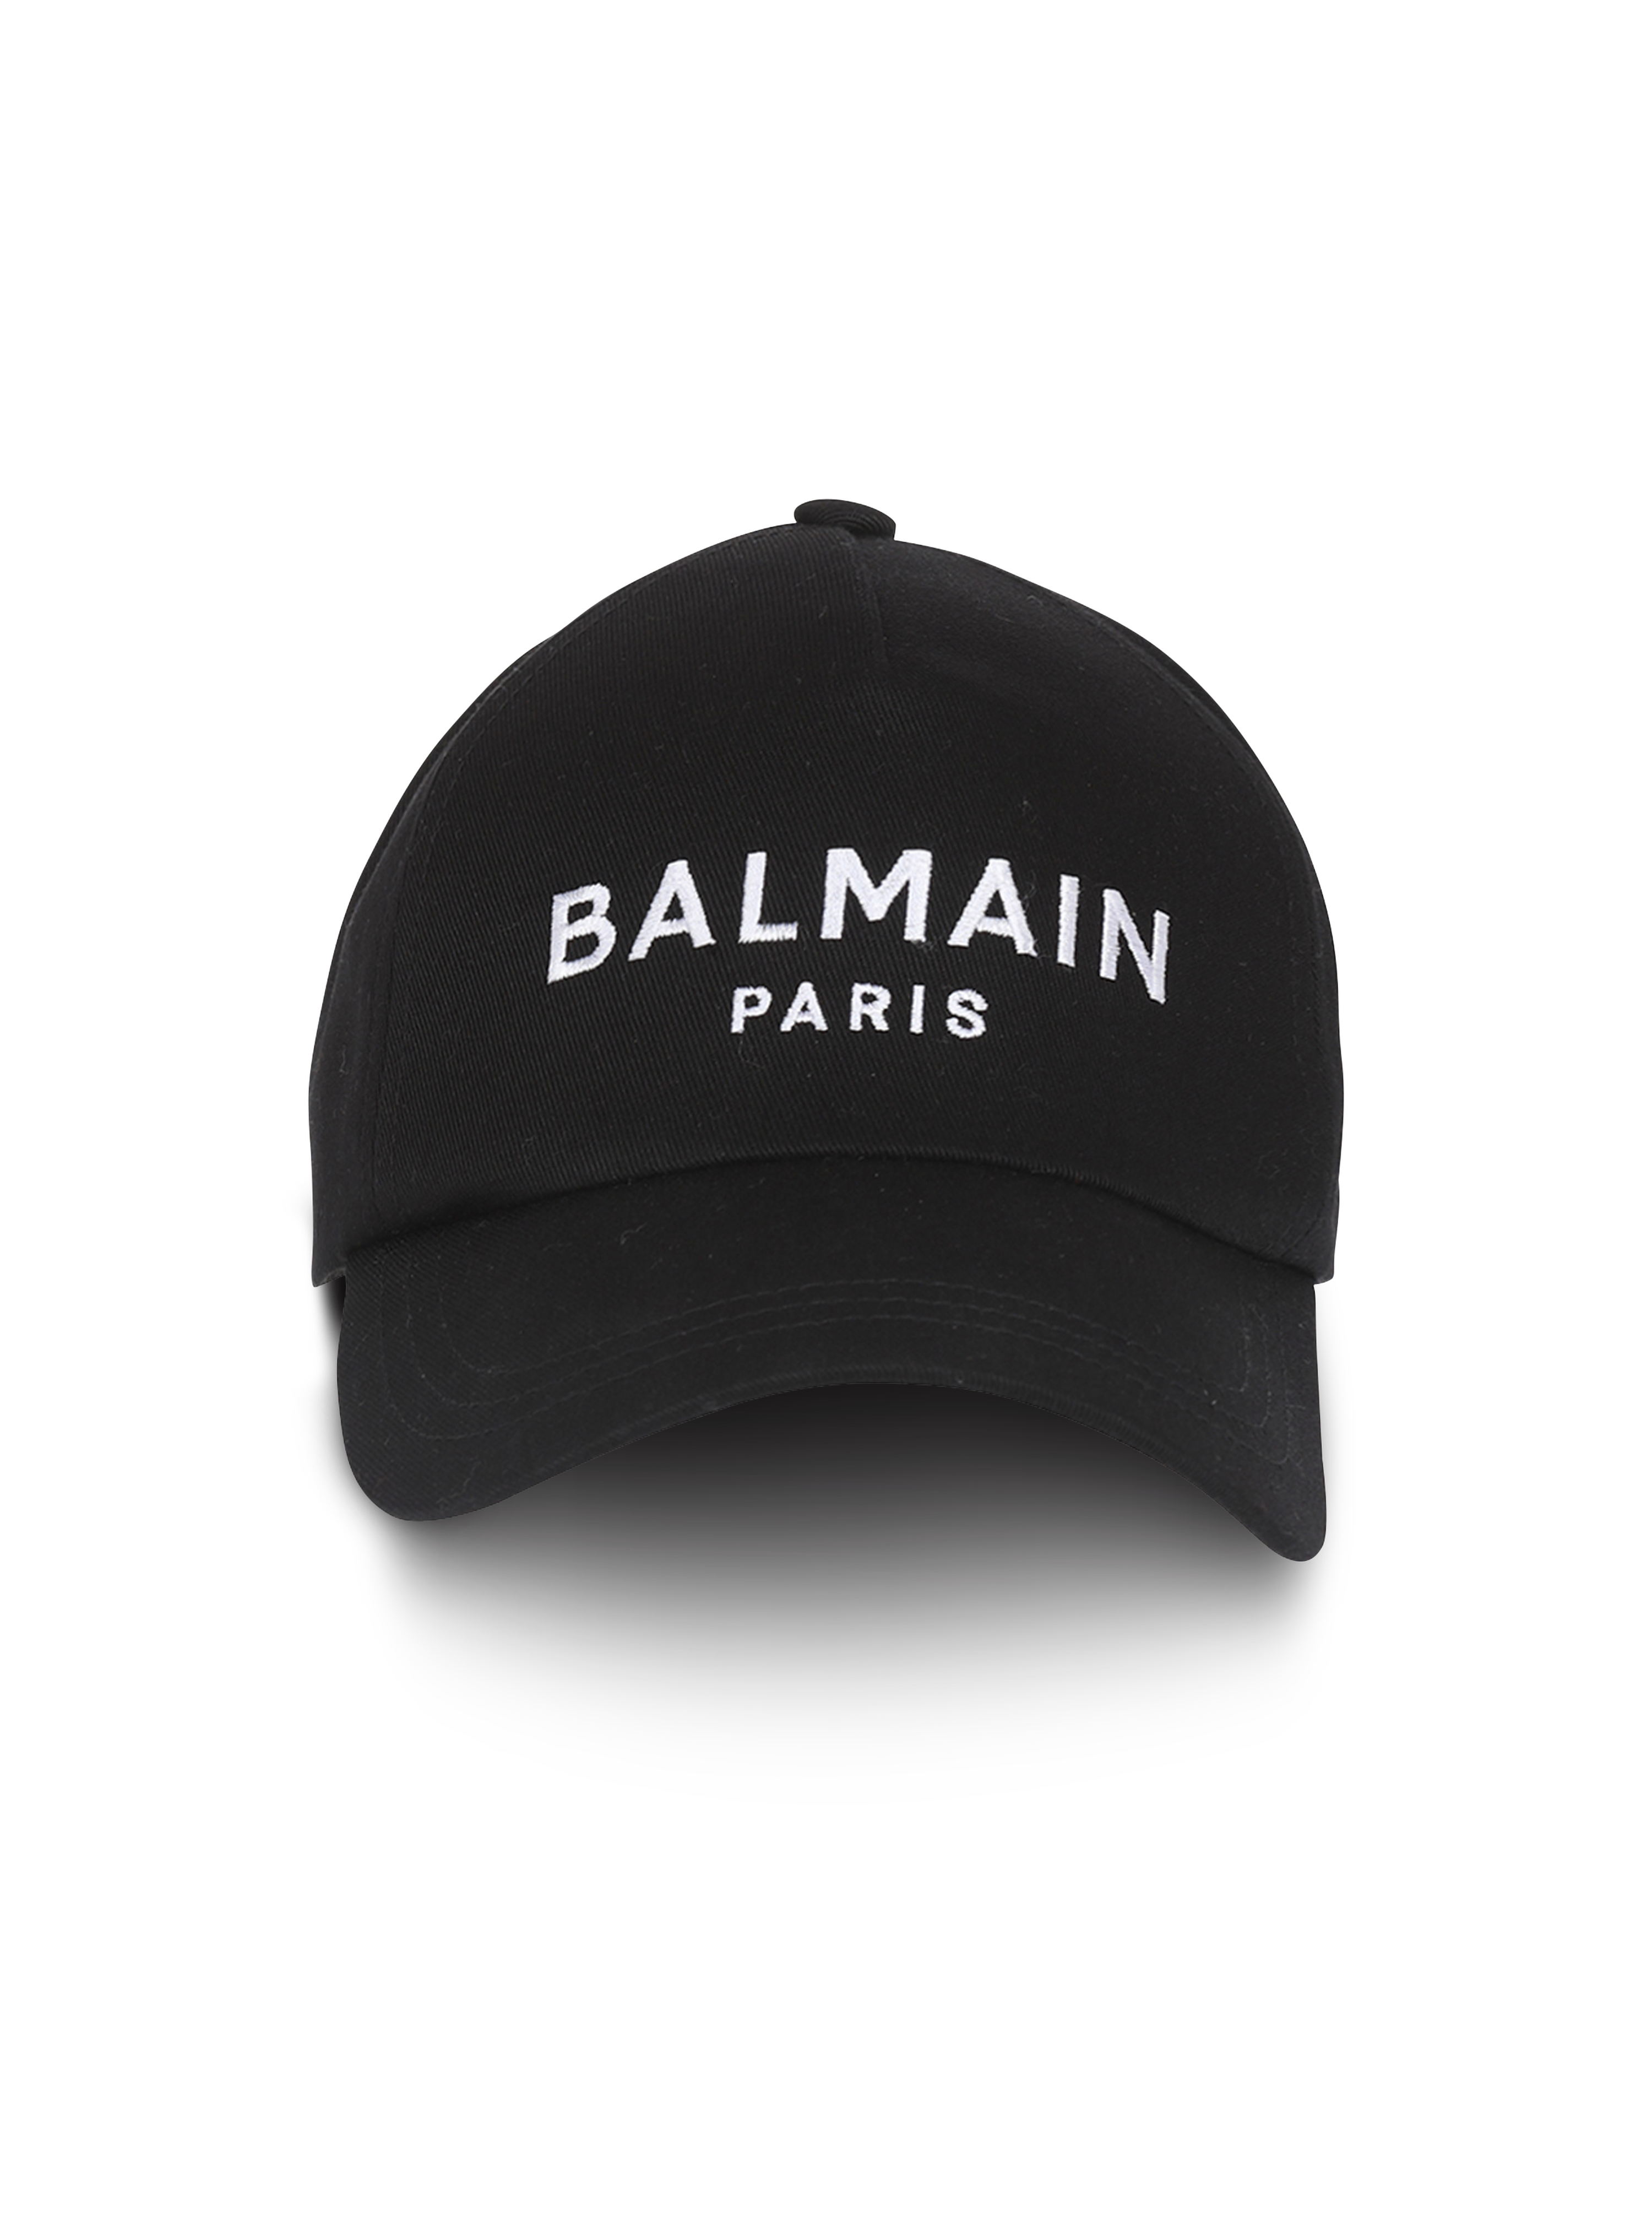 Cotton cap with Balmain Paris logo, black